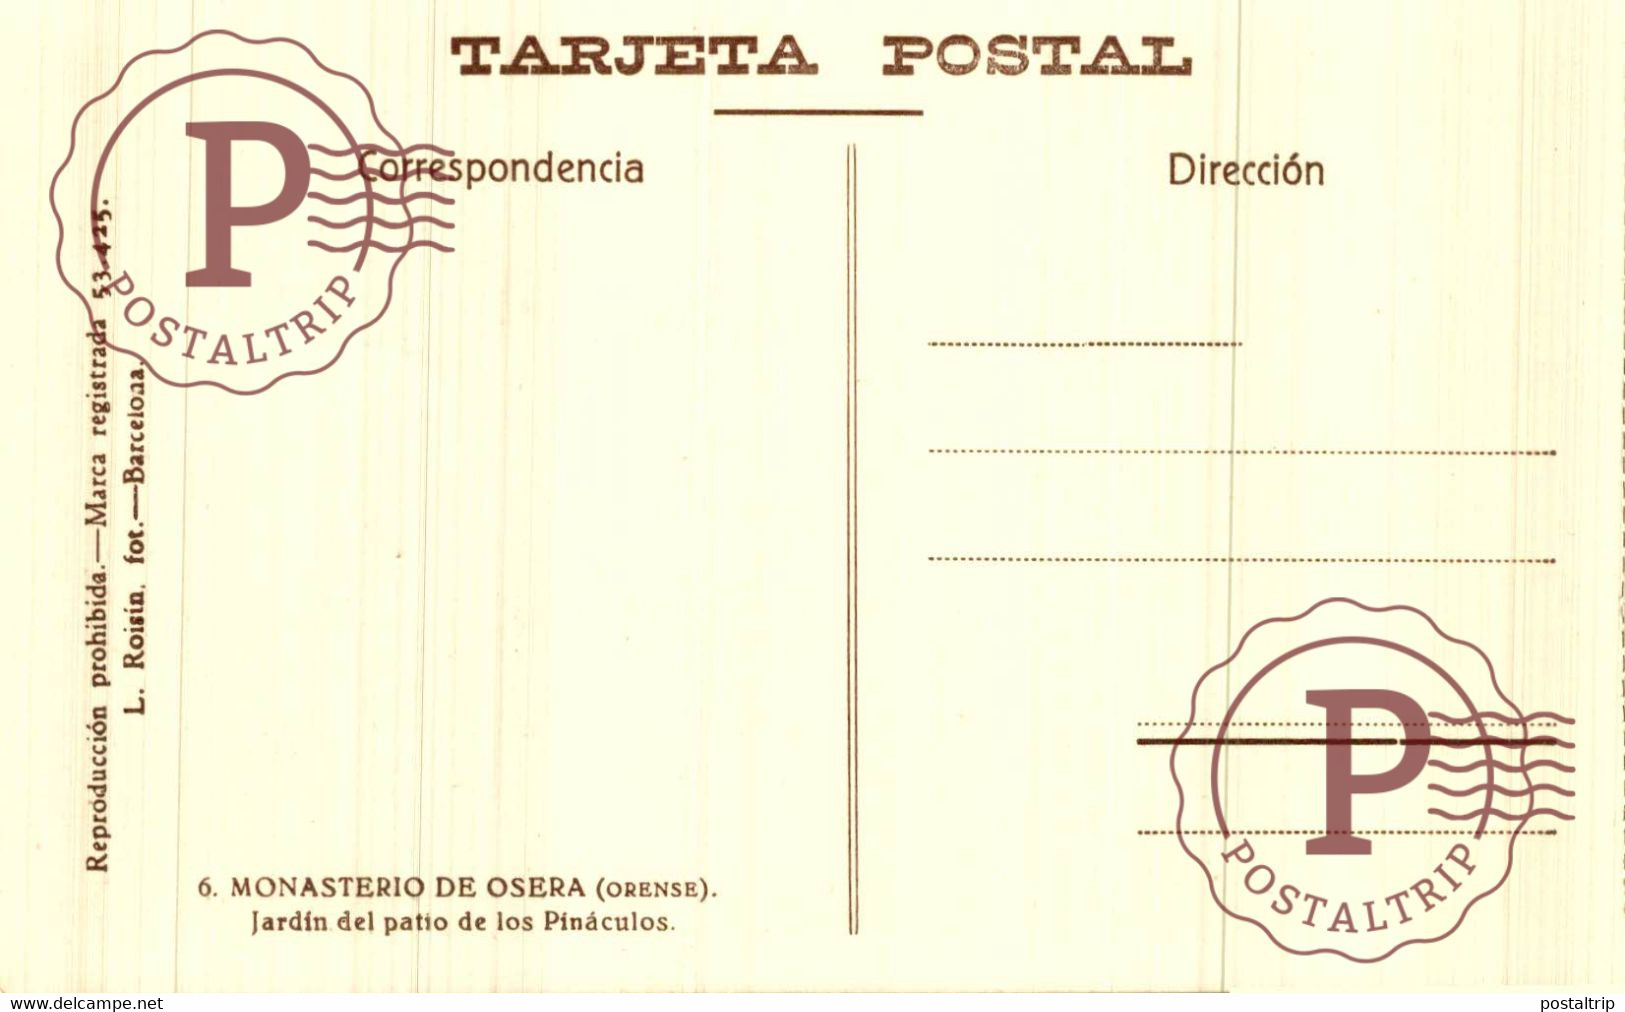 GALICIA. Libro con 20 postales del Monasterio de OSERA (Orense) (Ed.Roisin n.2)